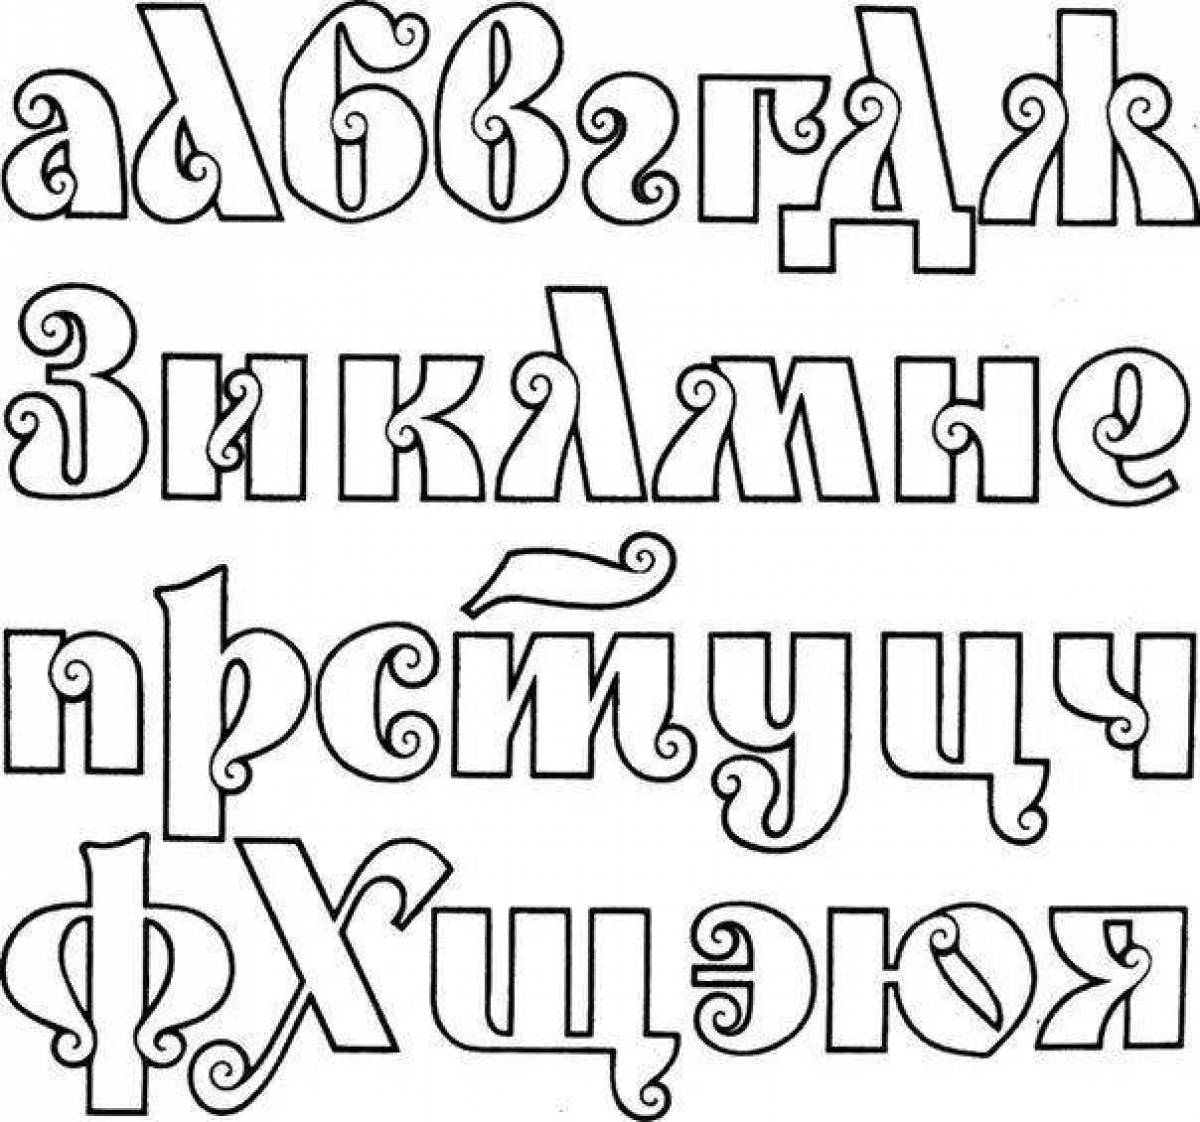 Русские шрифты файл. Декоративный шрифт. Шрифты на русском. Красивый шрифт на русском печатный. Красивый шрифт для плаката.